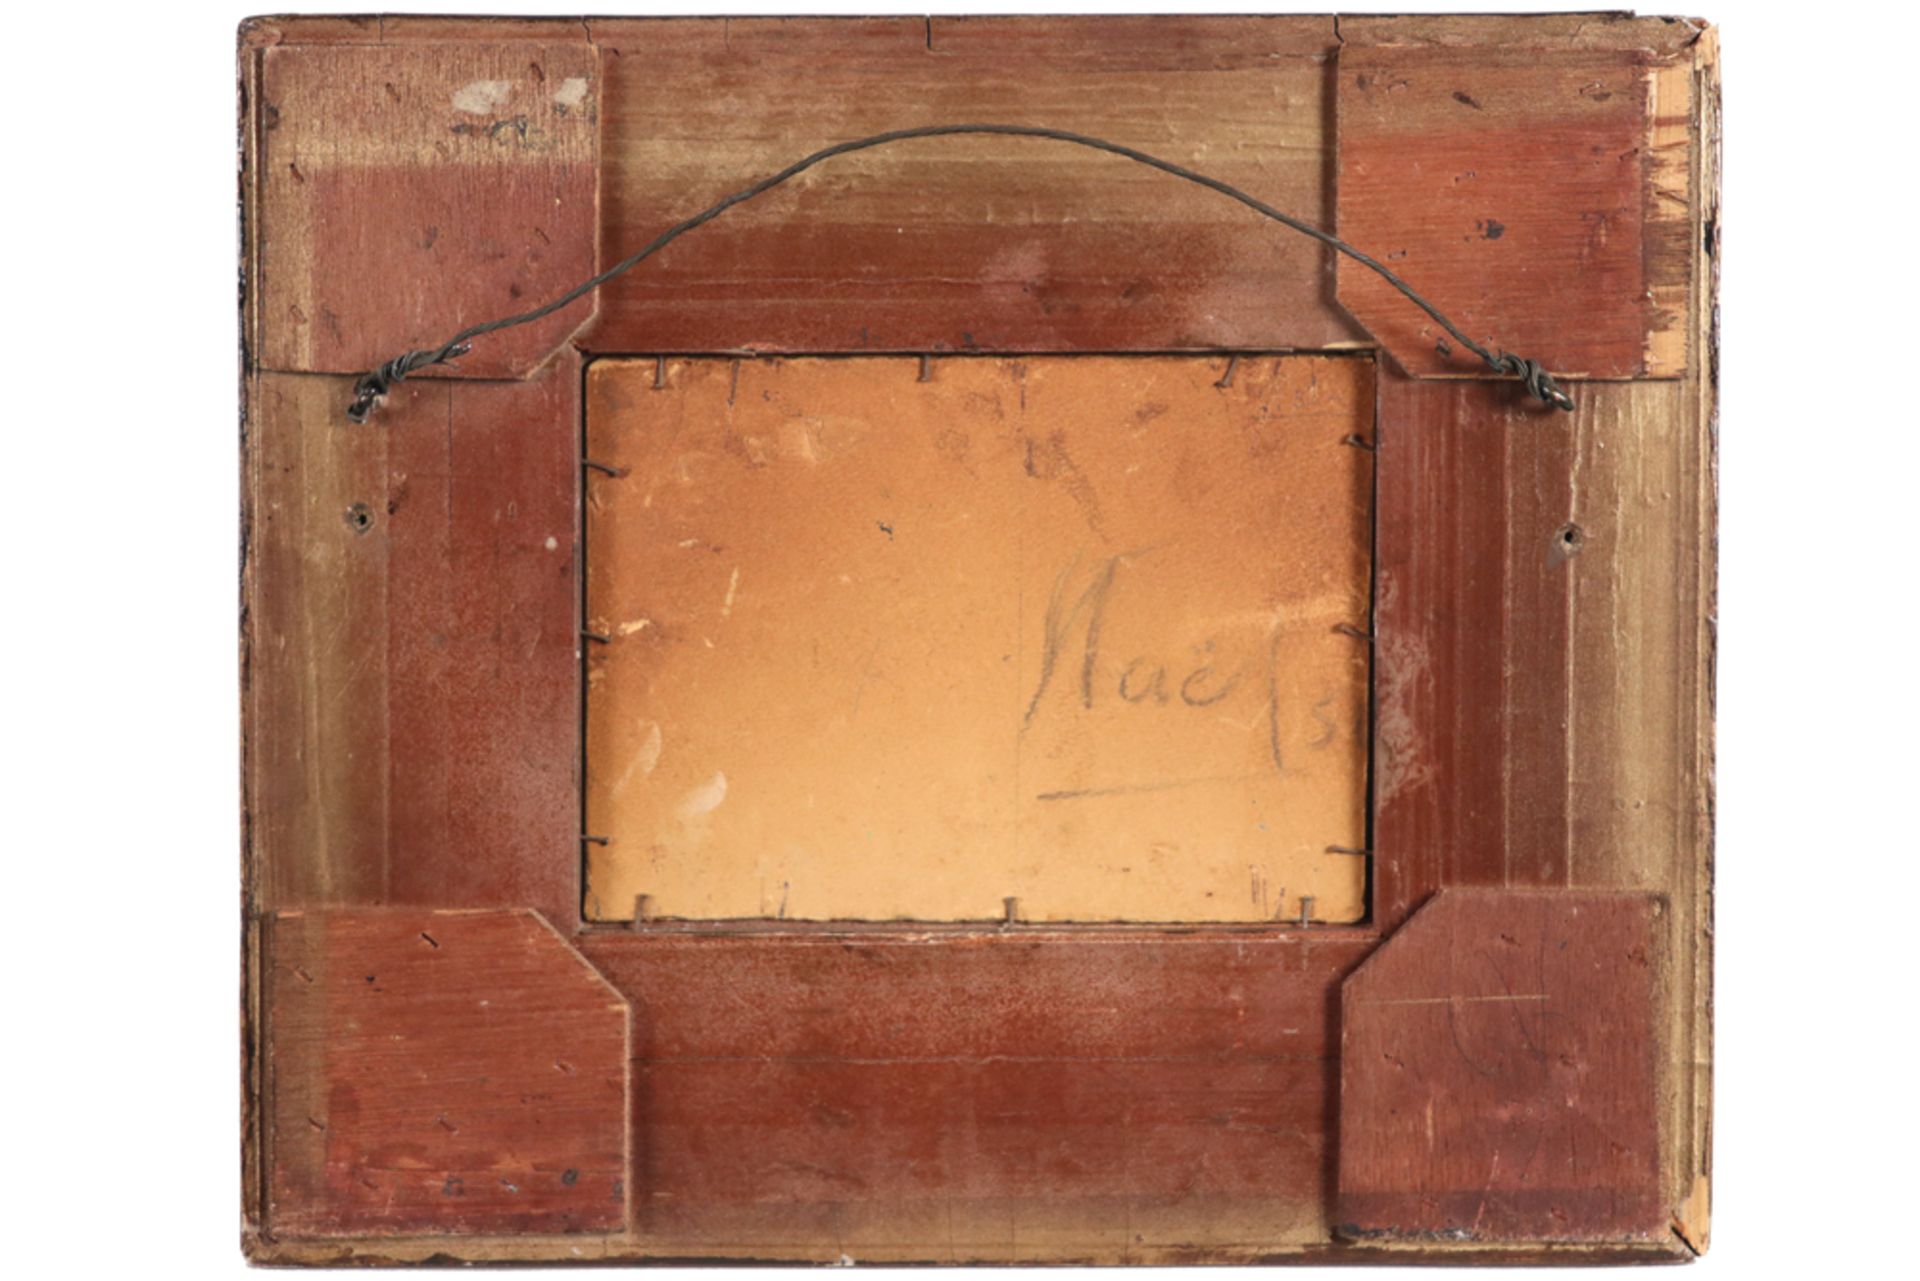 19th Cent. oil on board with an "S.T." monogram || S.T. Negentiende eeuws olieverfschilderij op - Bild 4 aus 4